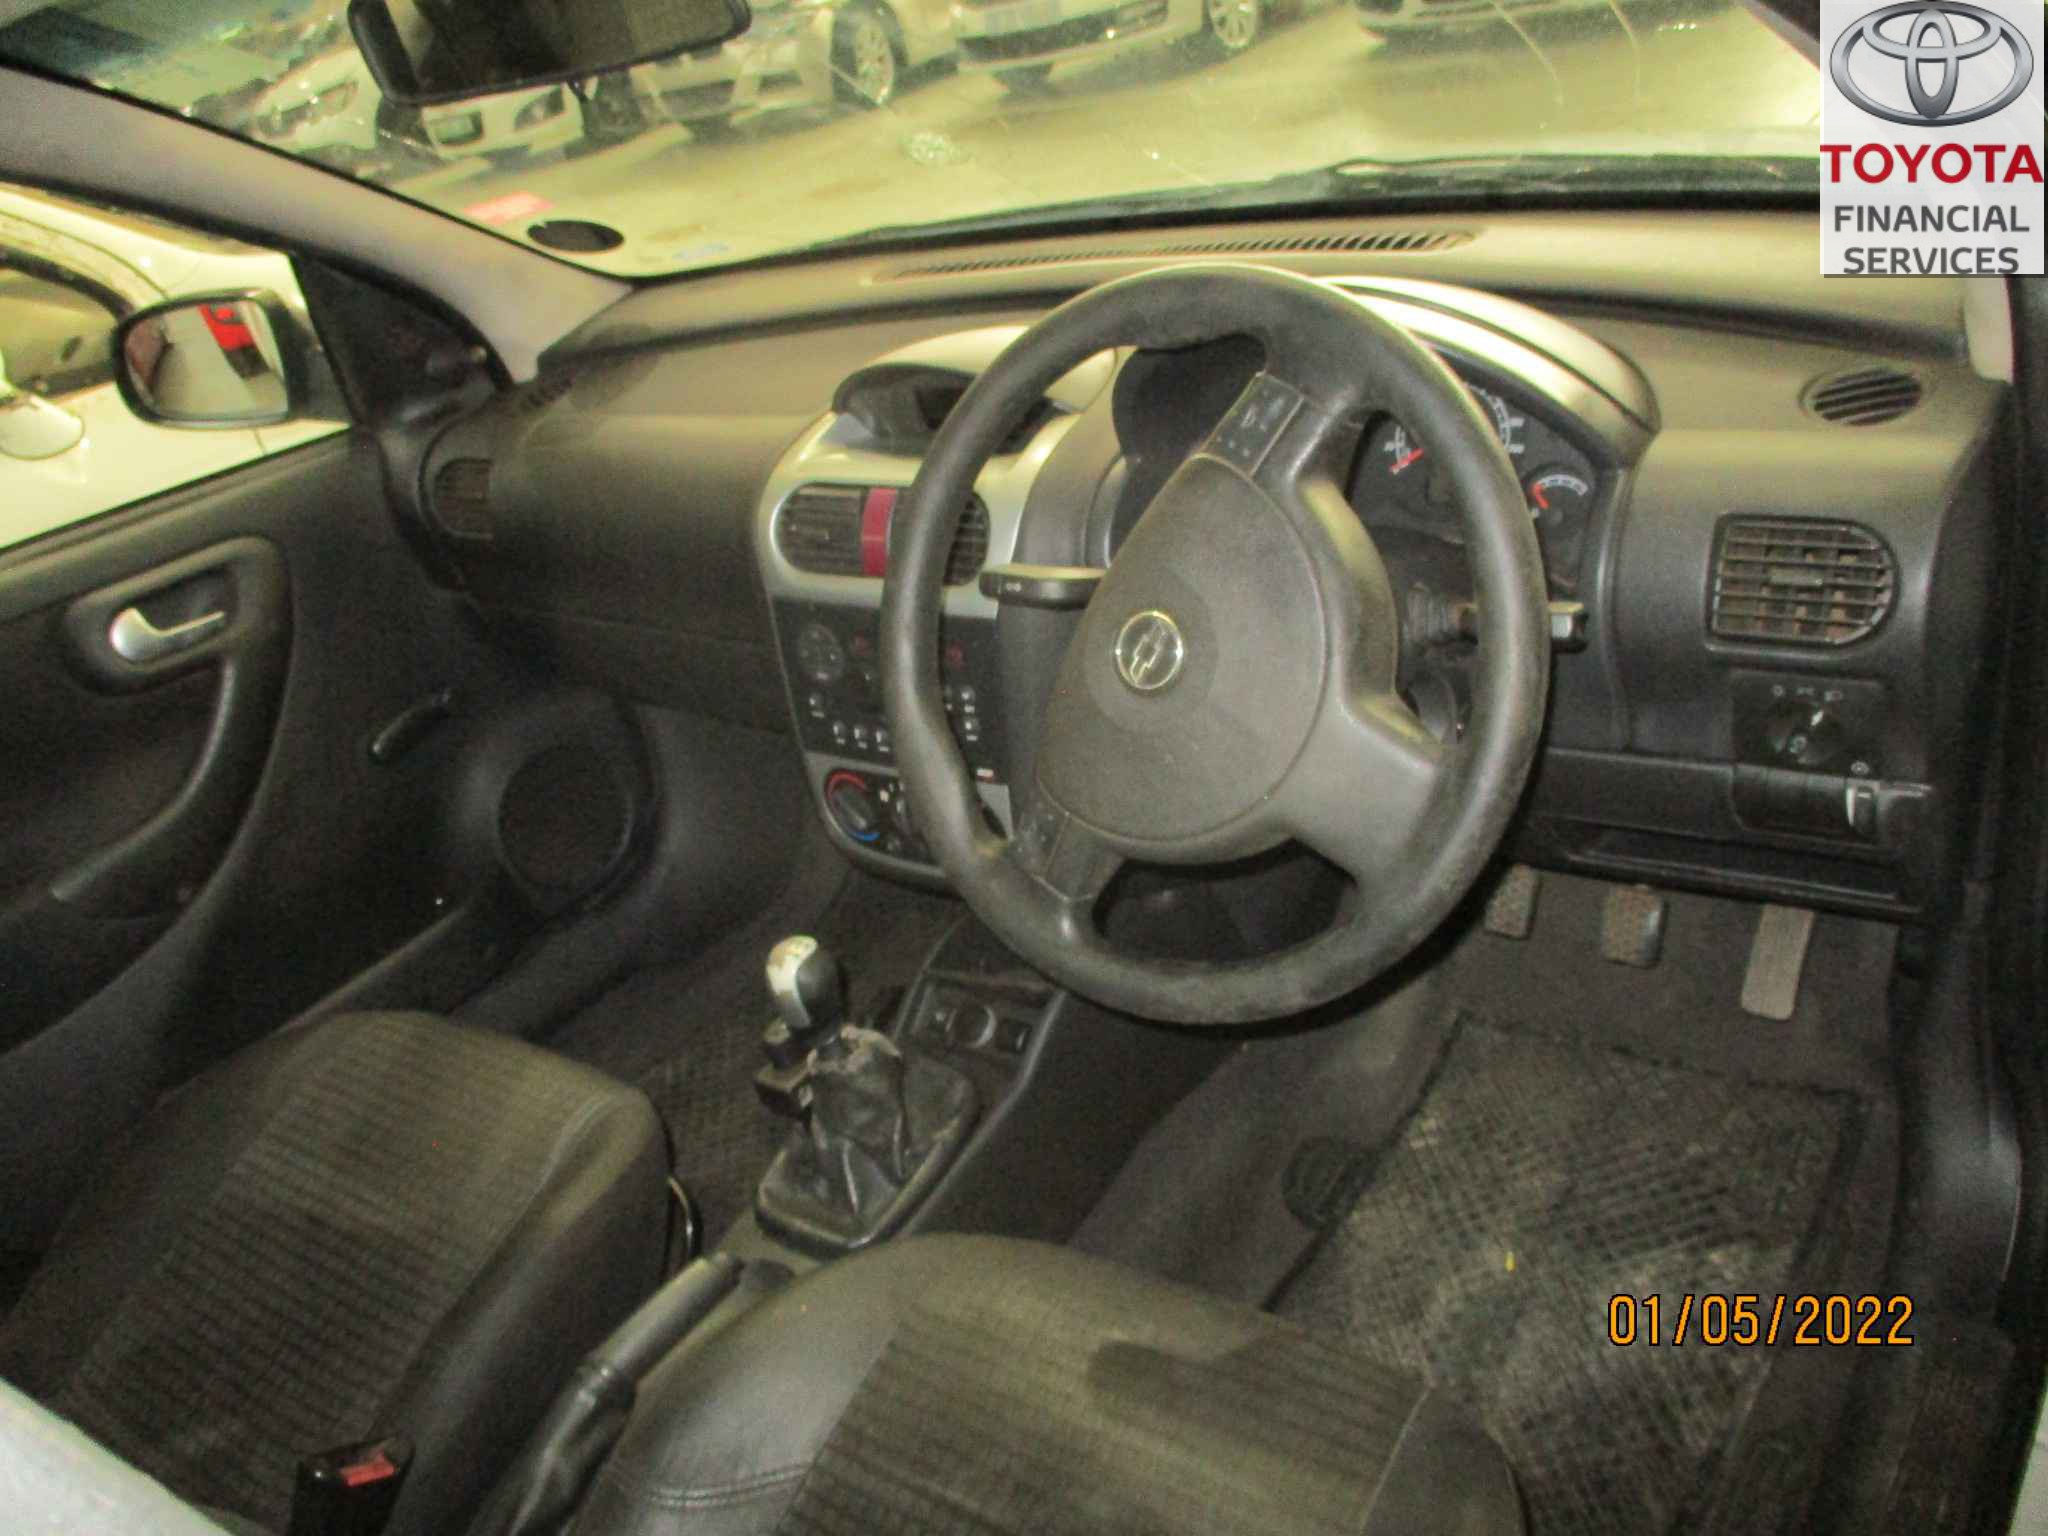 Chevrolet Corsa Utility 2010 images (2048x1536)